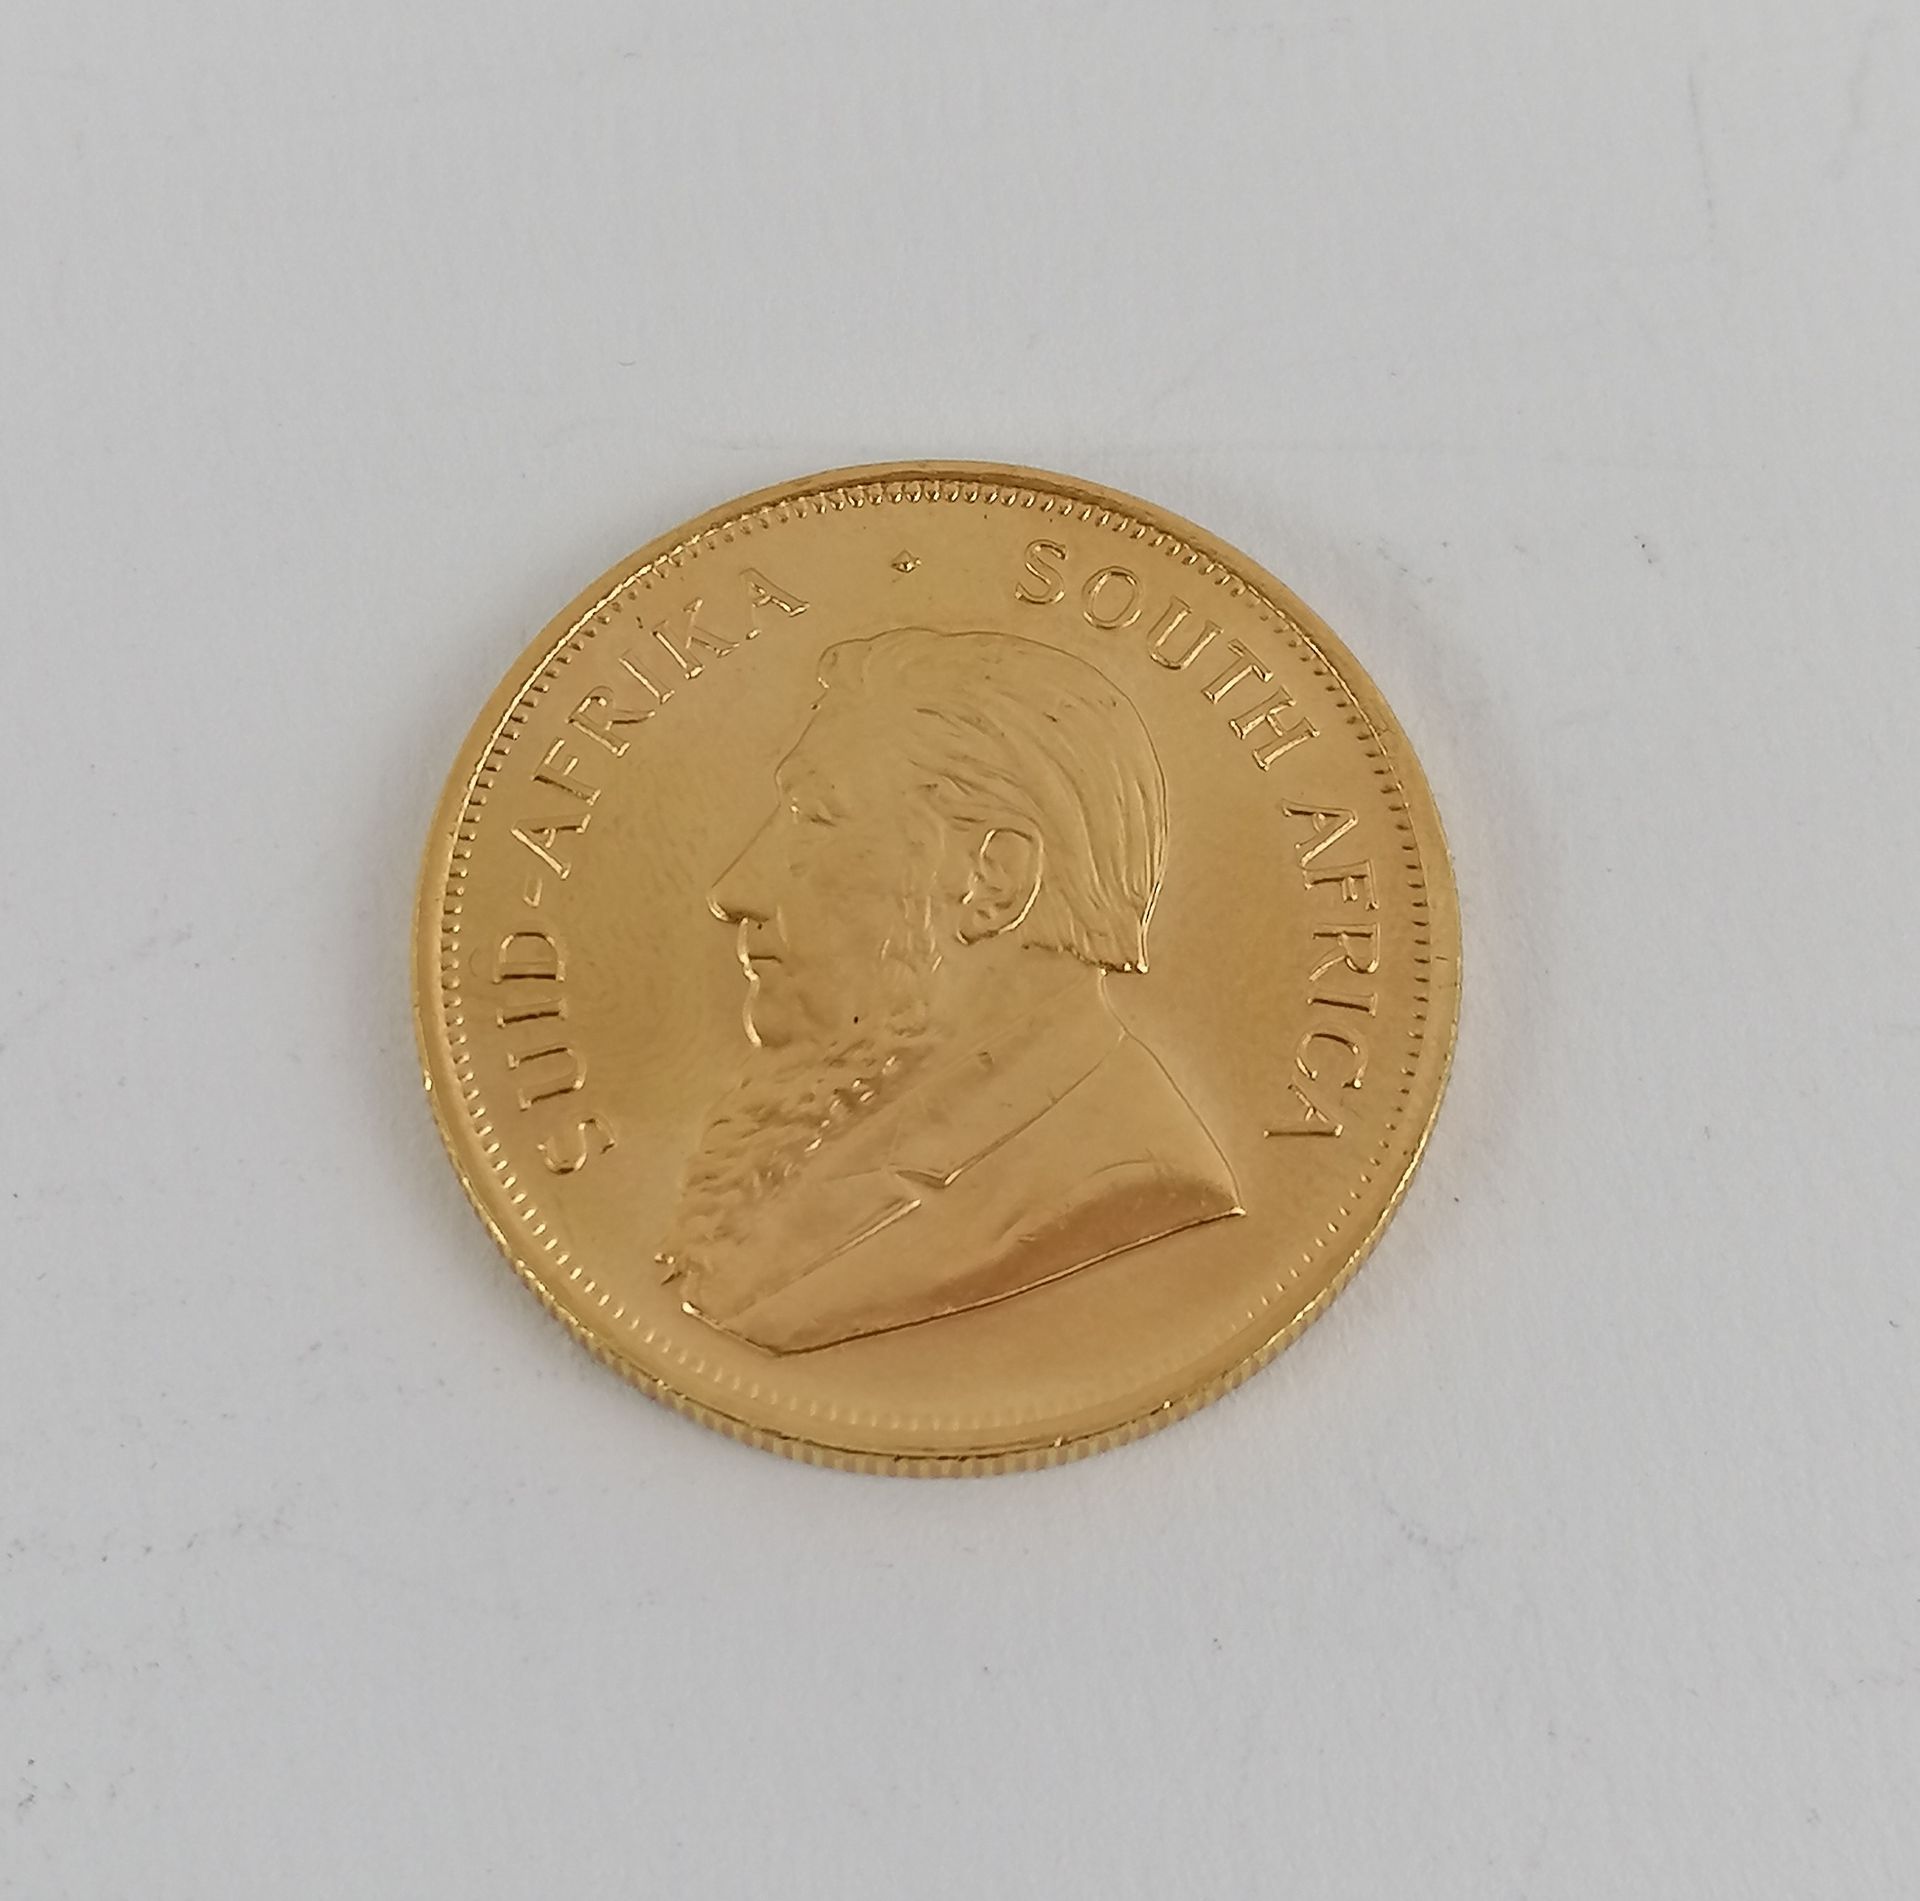 Null Una moneta d'oro Sudafrica Kruggerand 1983.
Peso: 34 g